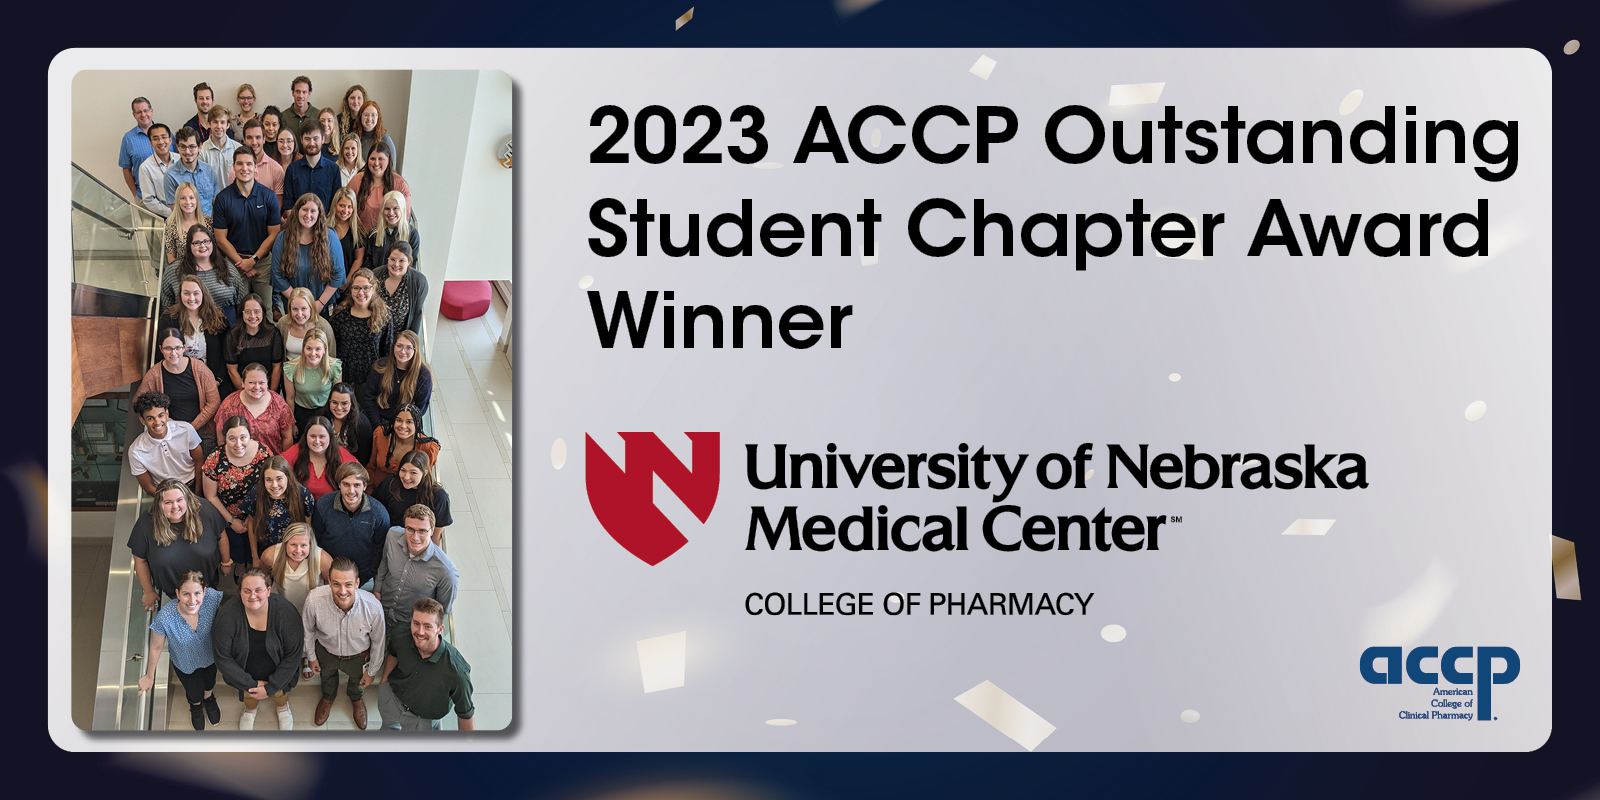 University of Nebraska Wins 2023 ACCP Outstanding Student Chapter Award